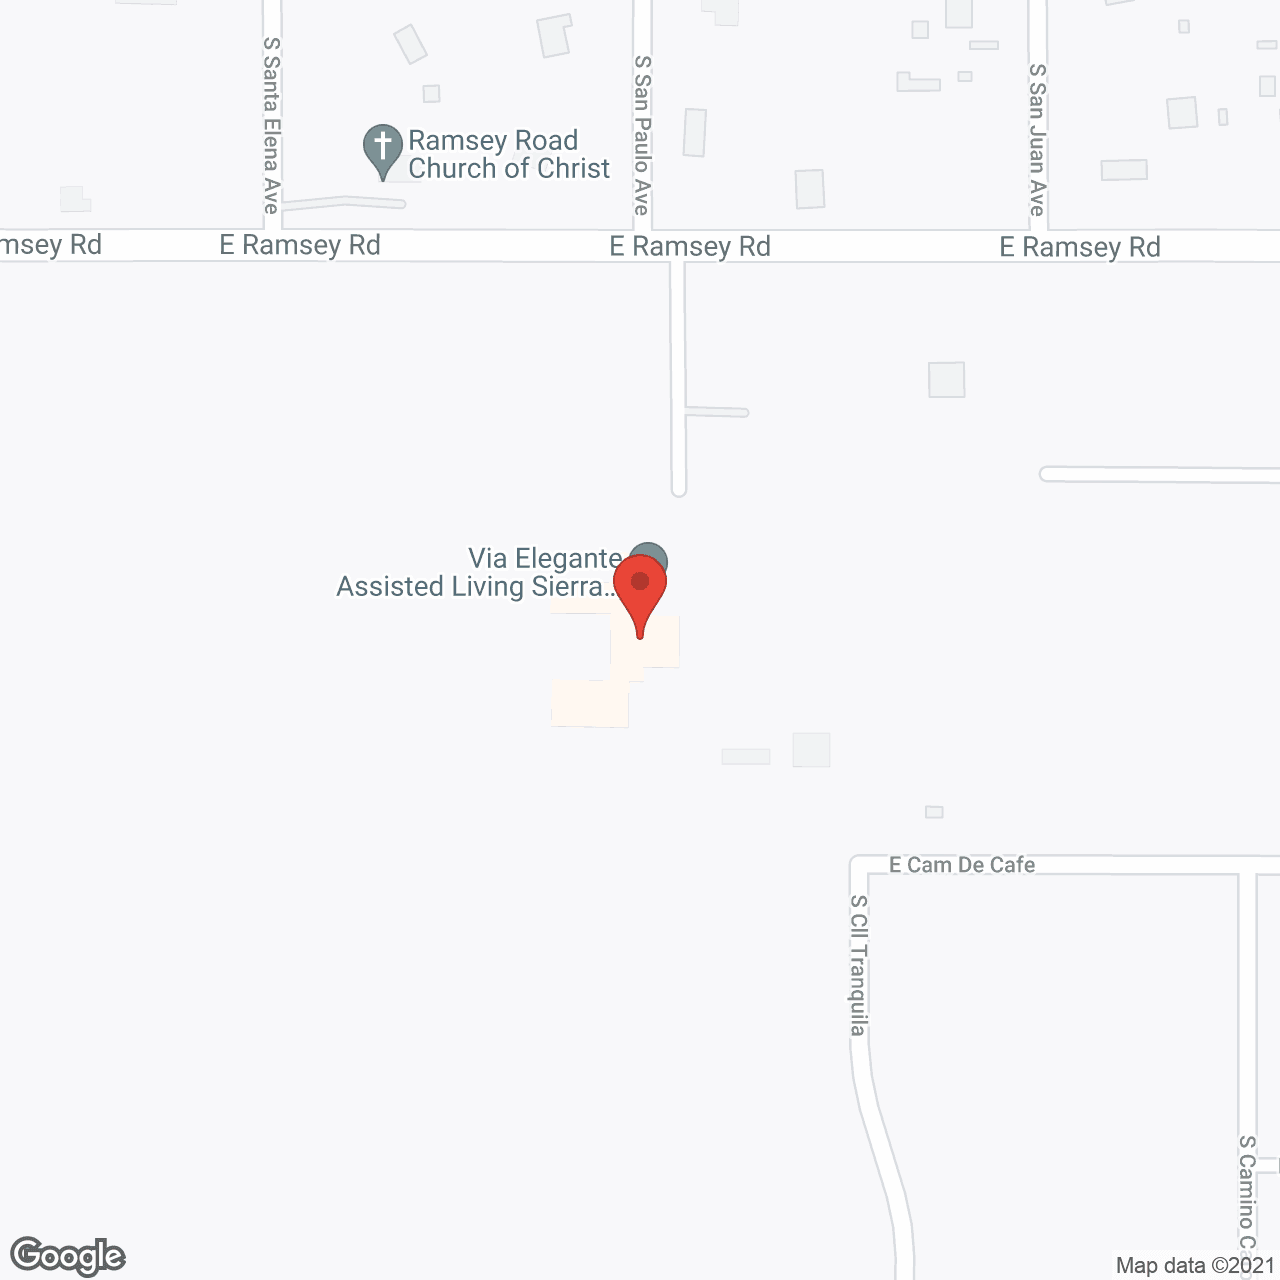 Via Elegante, Sierra Vista in google map